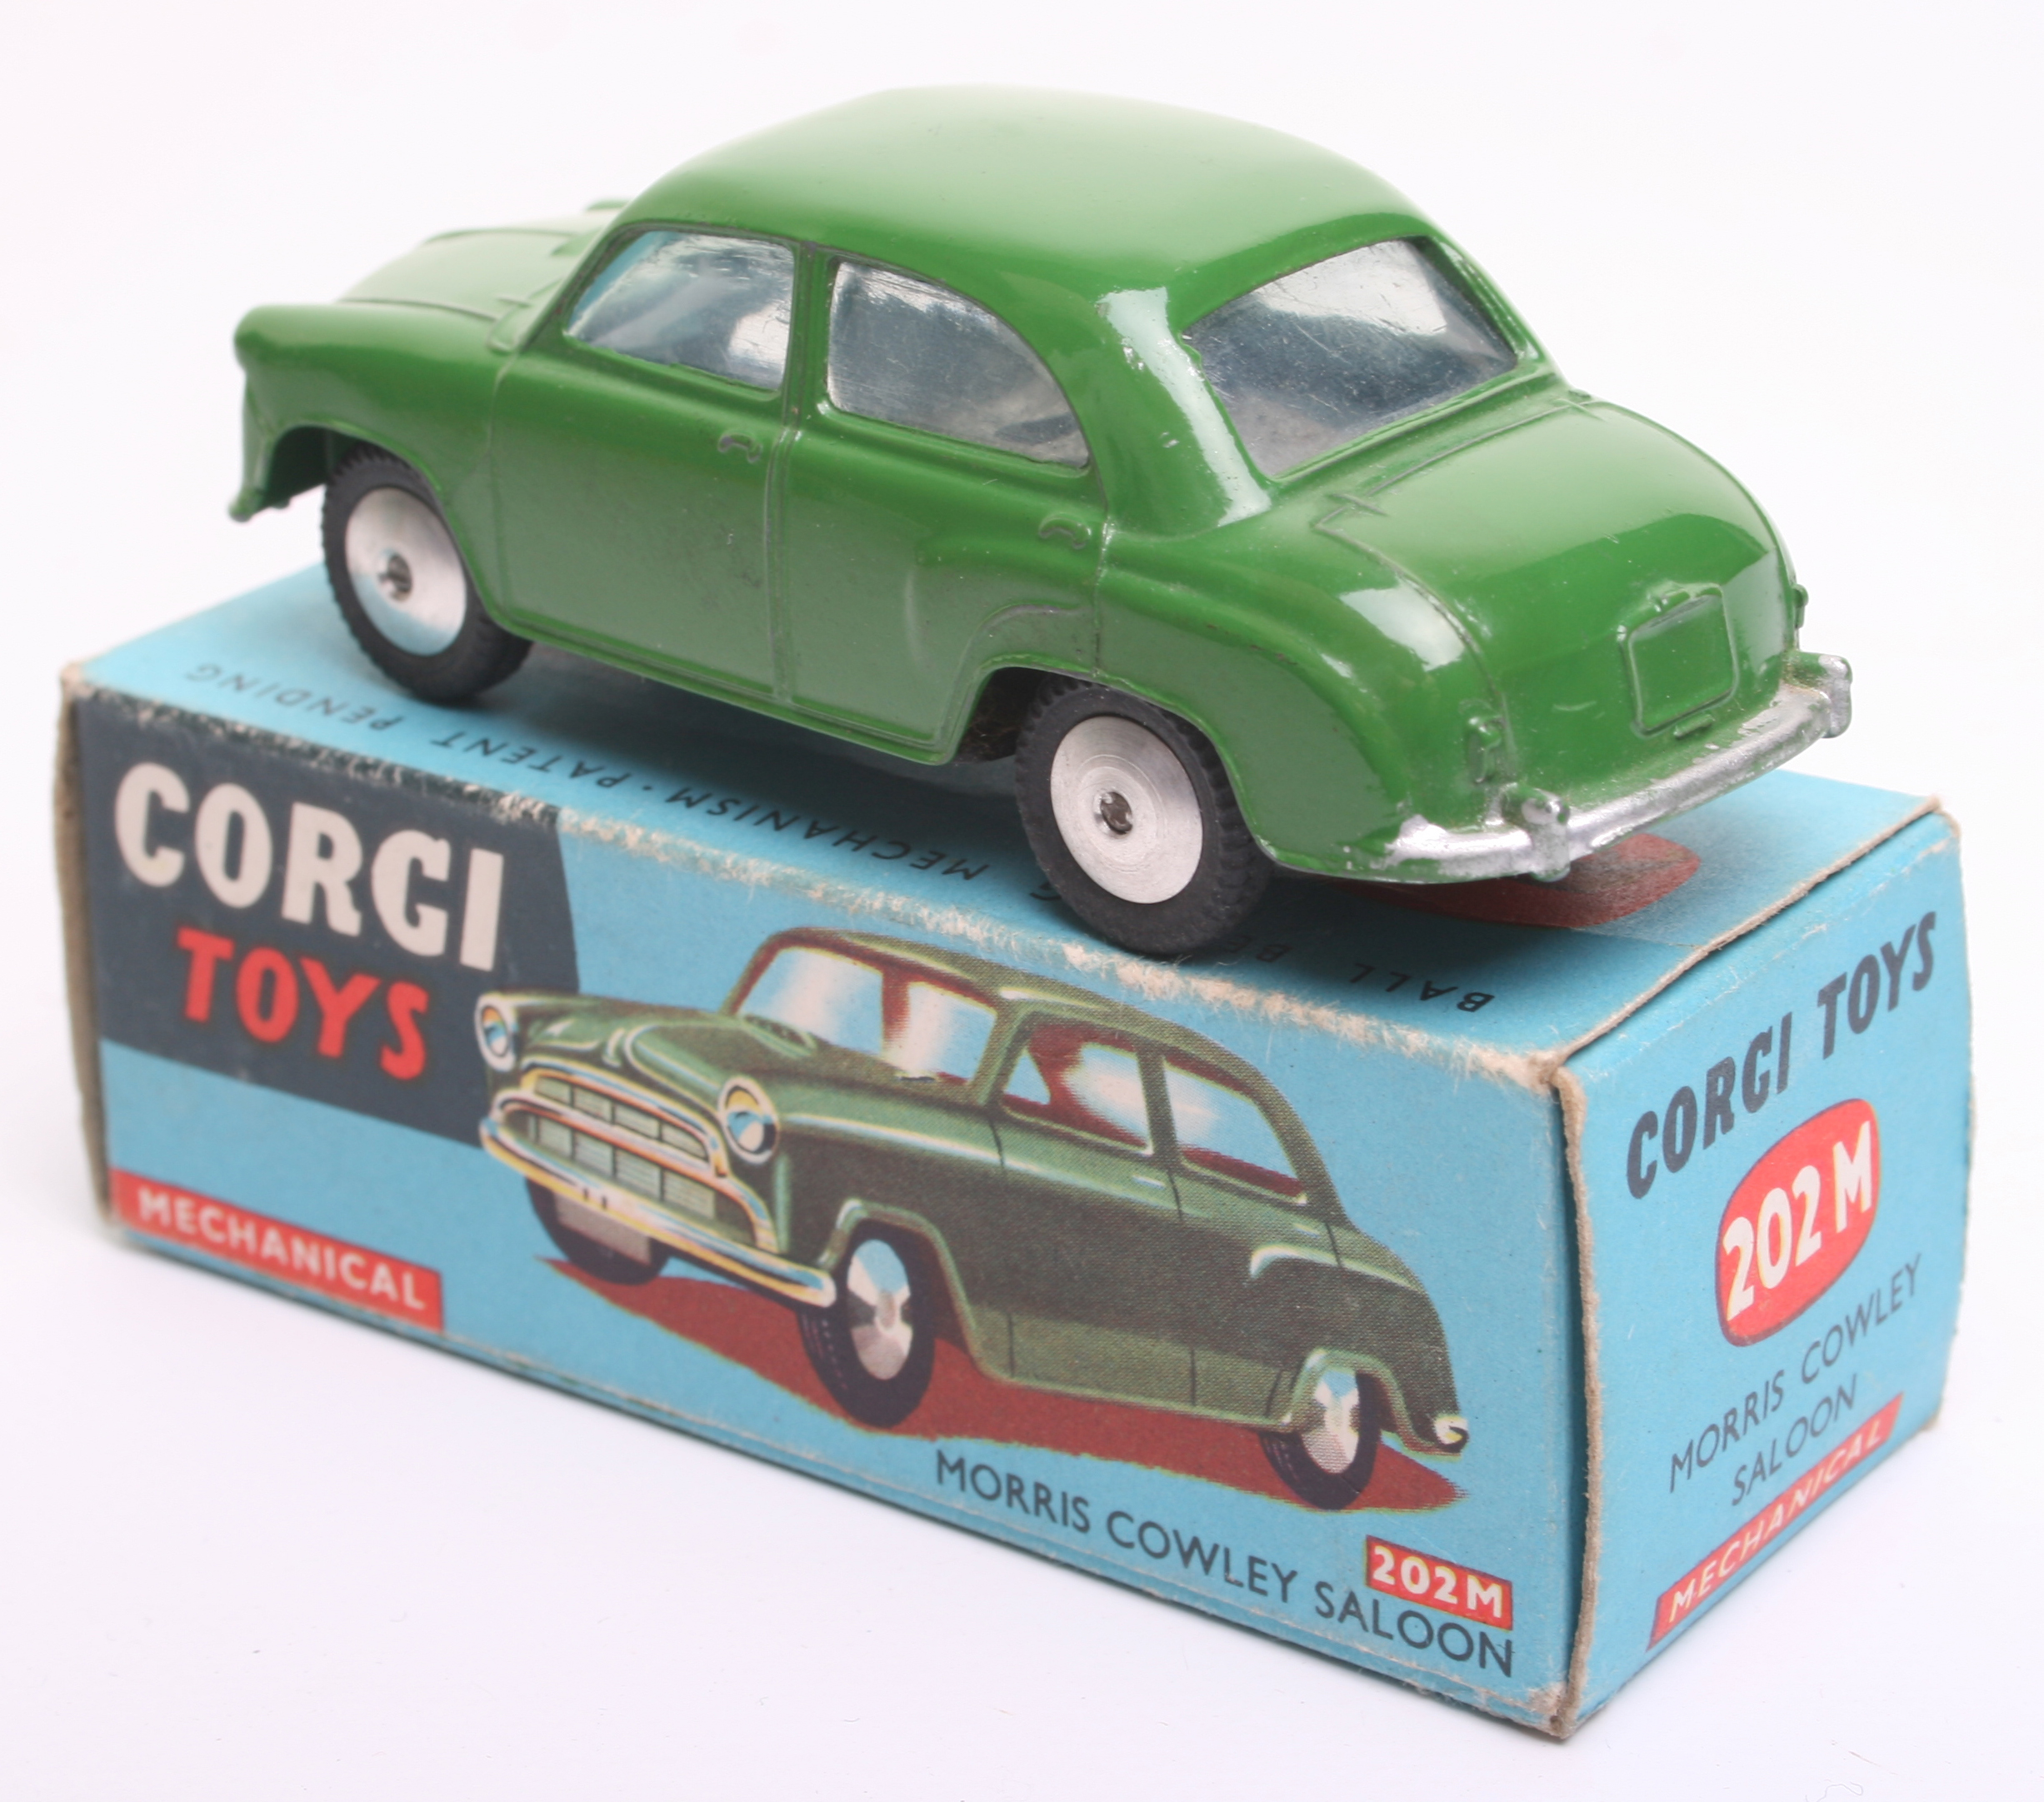 Corgi Toys 202M Morris Cowley Saloon Car, green  body, flat spun wheels,with flywheel motor in - Image 2 of 2